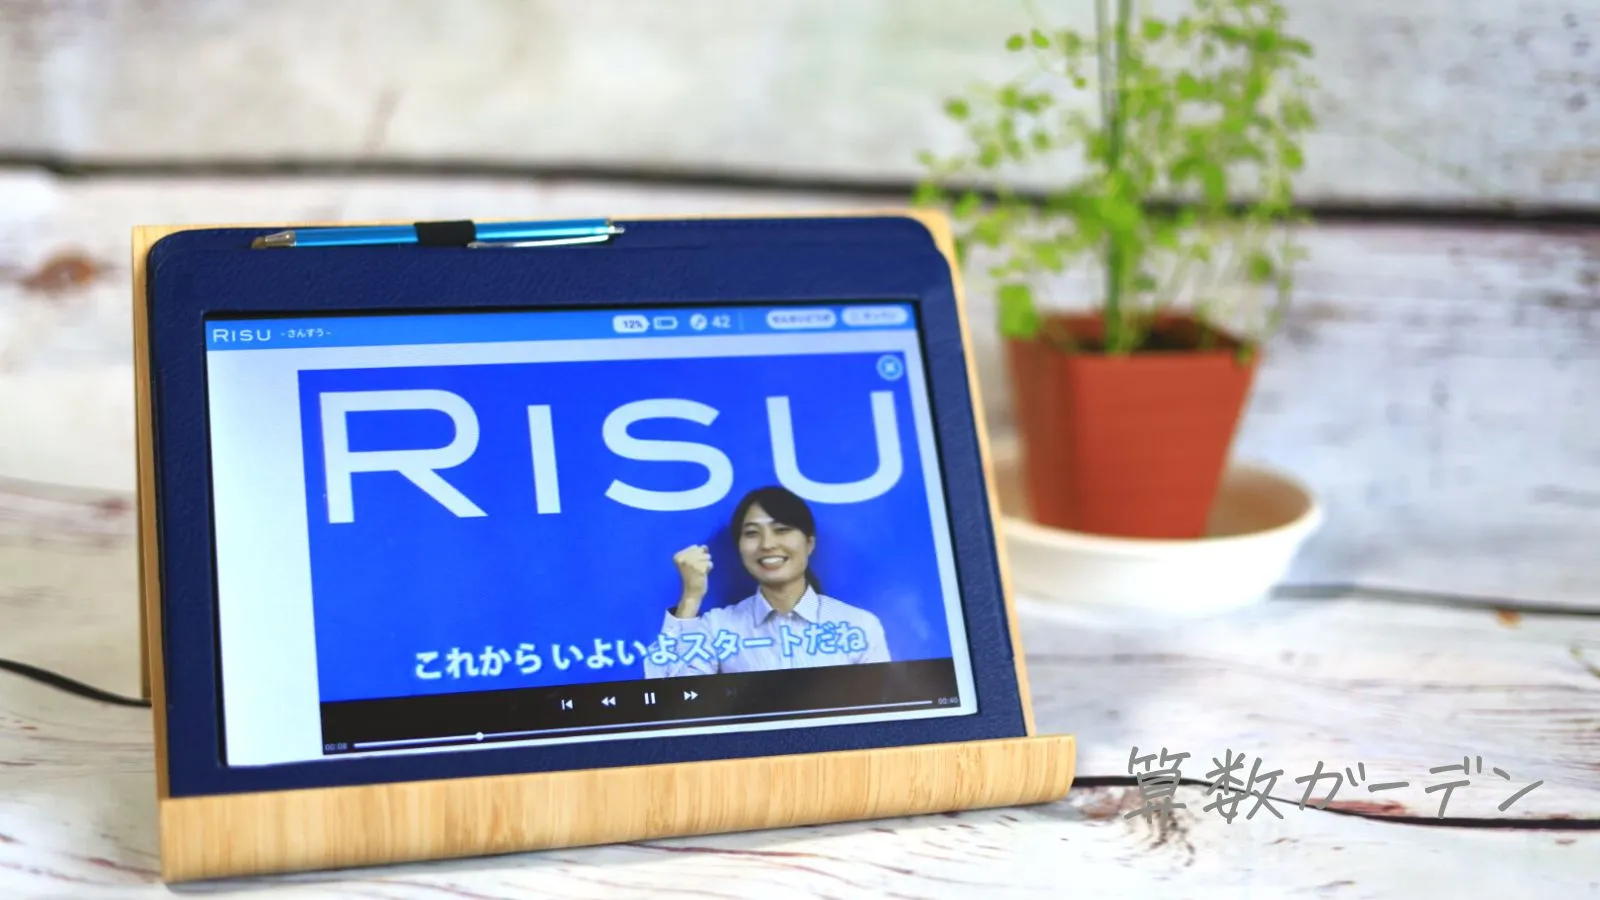 RISU算数先生動画